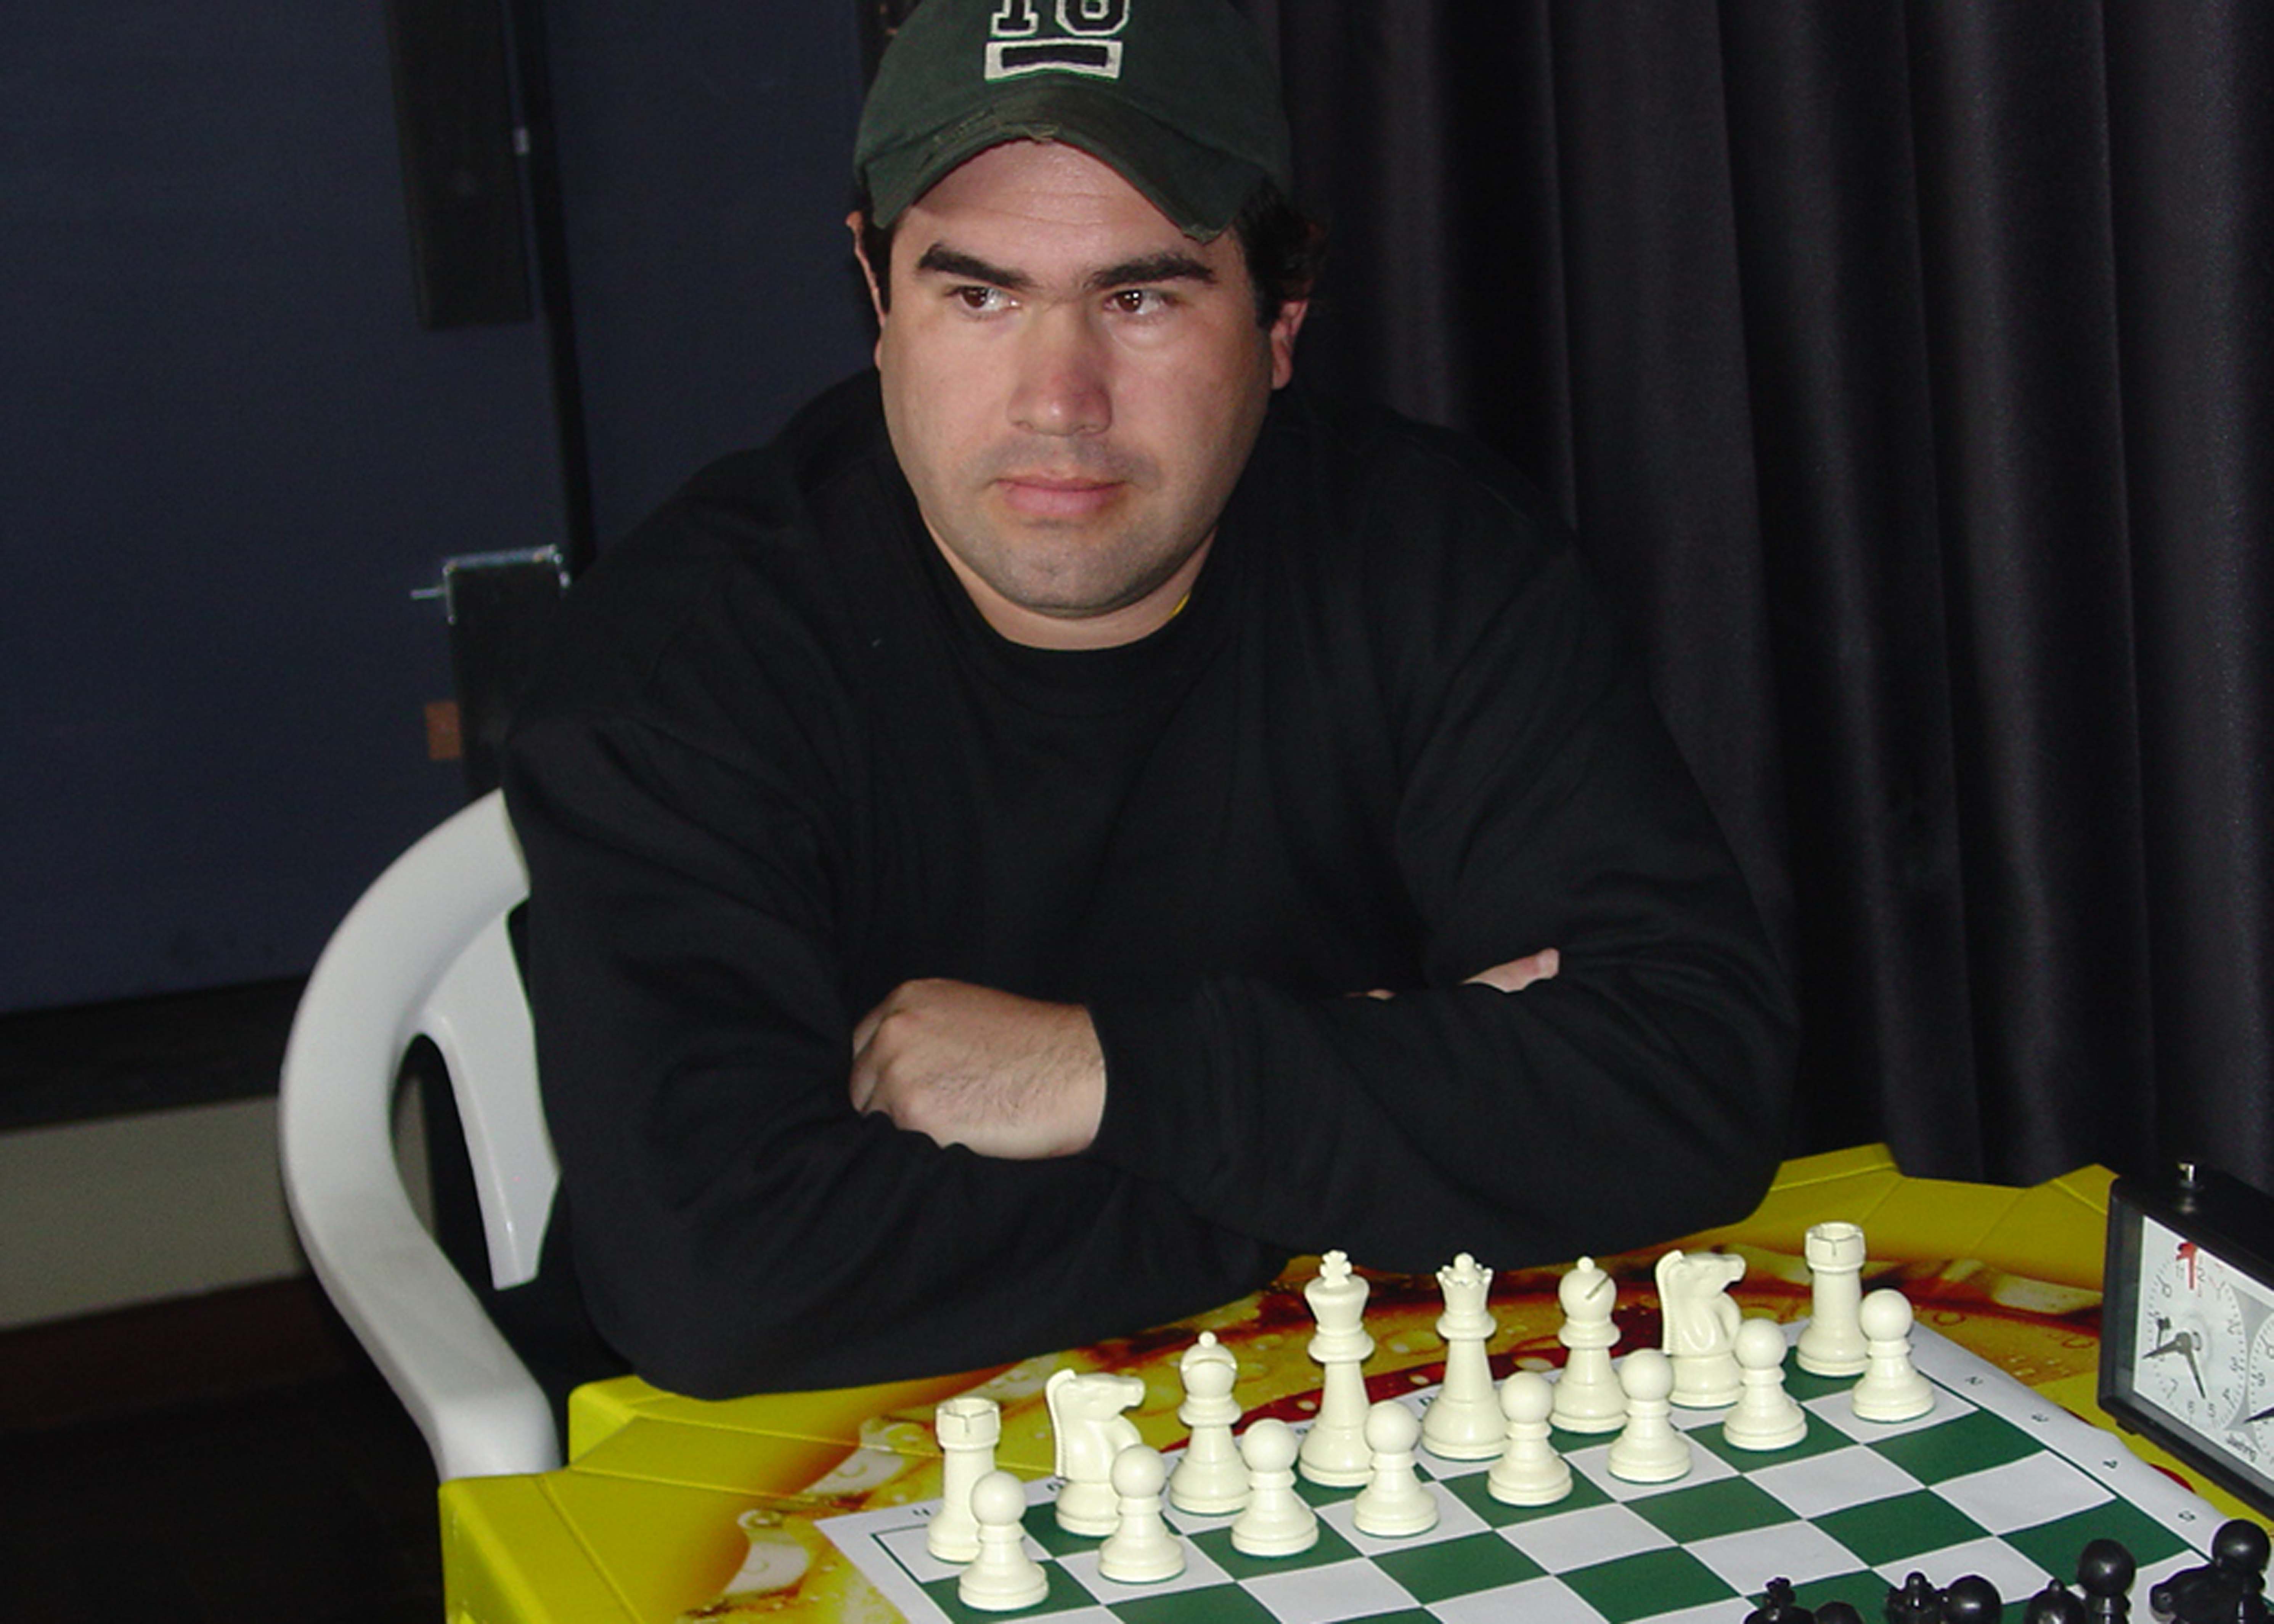 Xadrez para iniciantes - Jorge Ibanez - Sebo Oficial